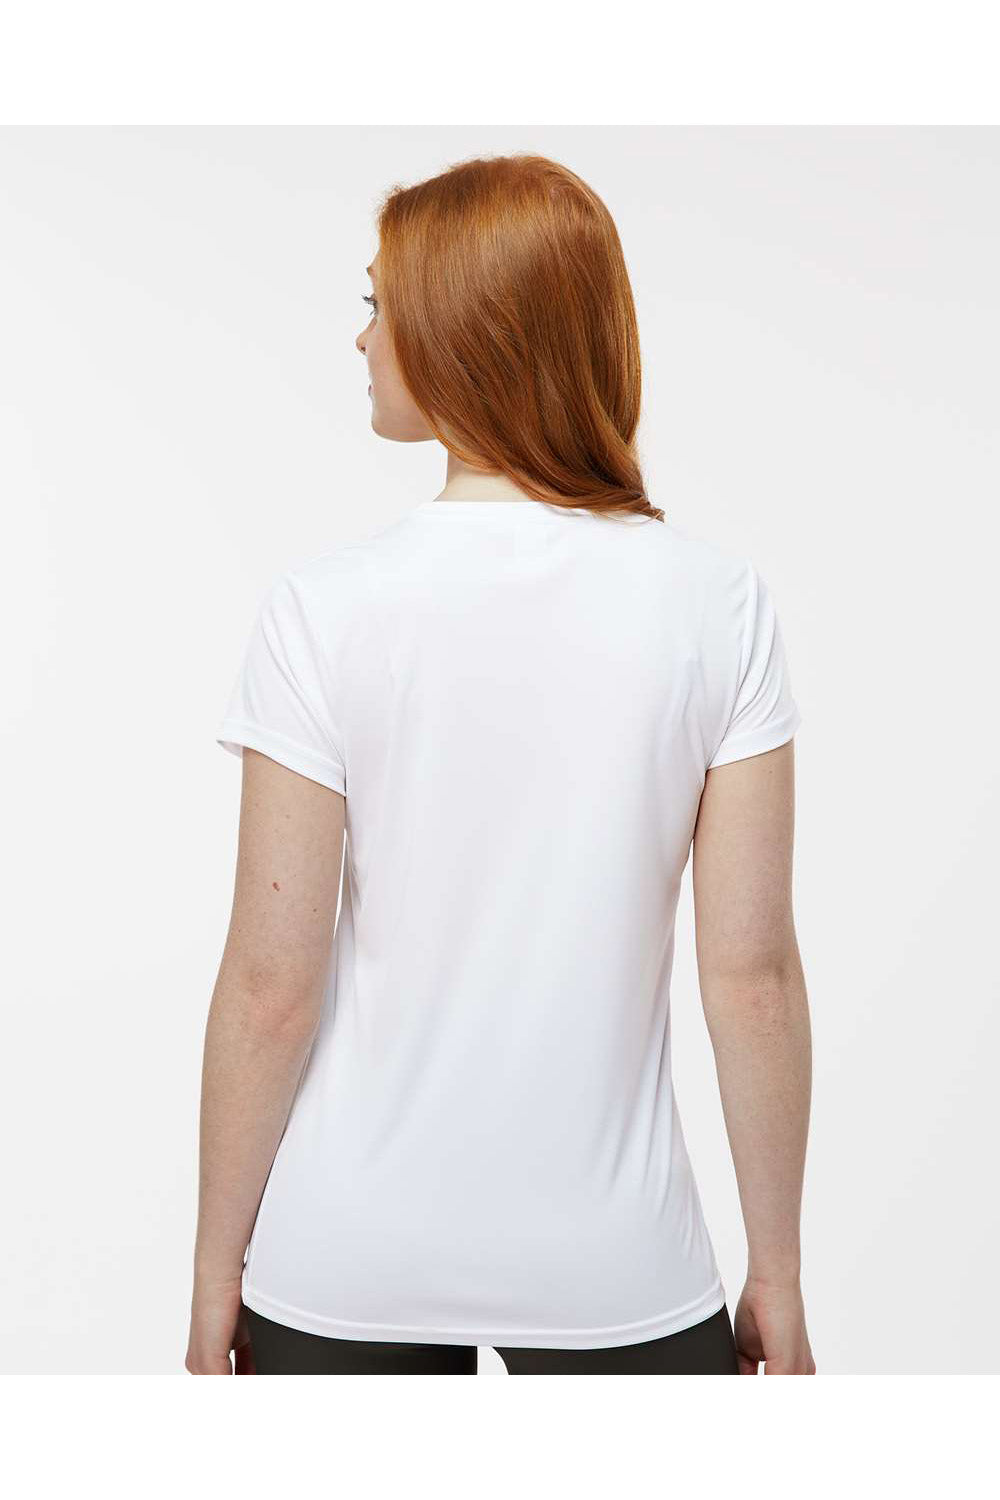 Paragon 204 Womens Islander Performance Short Sleeve Crewneck T-Shirt White Model Back